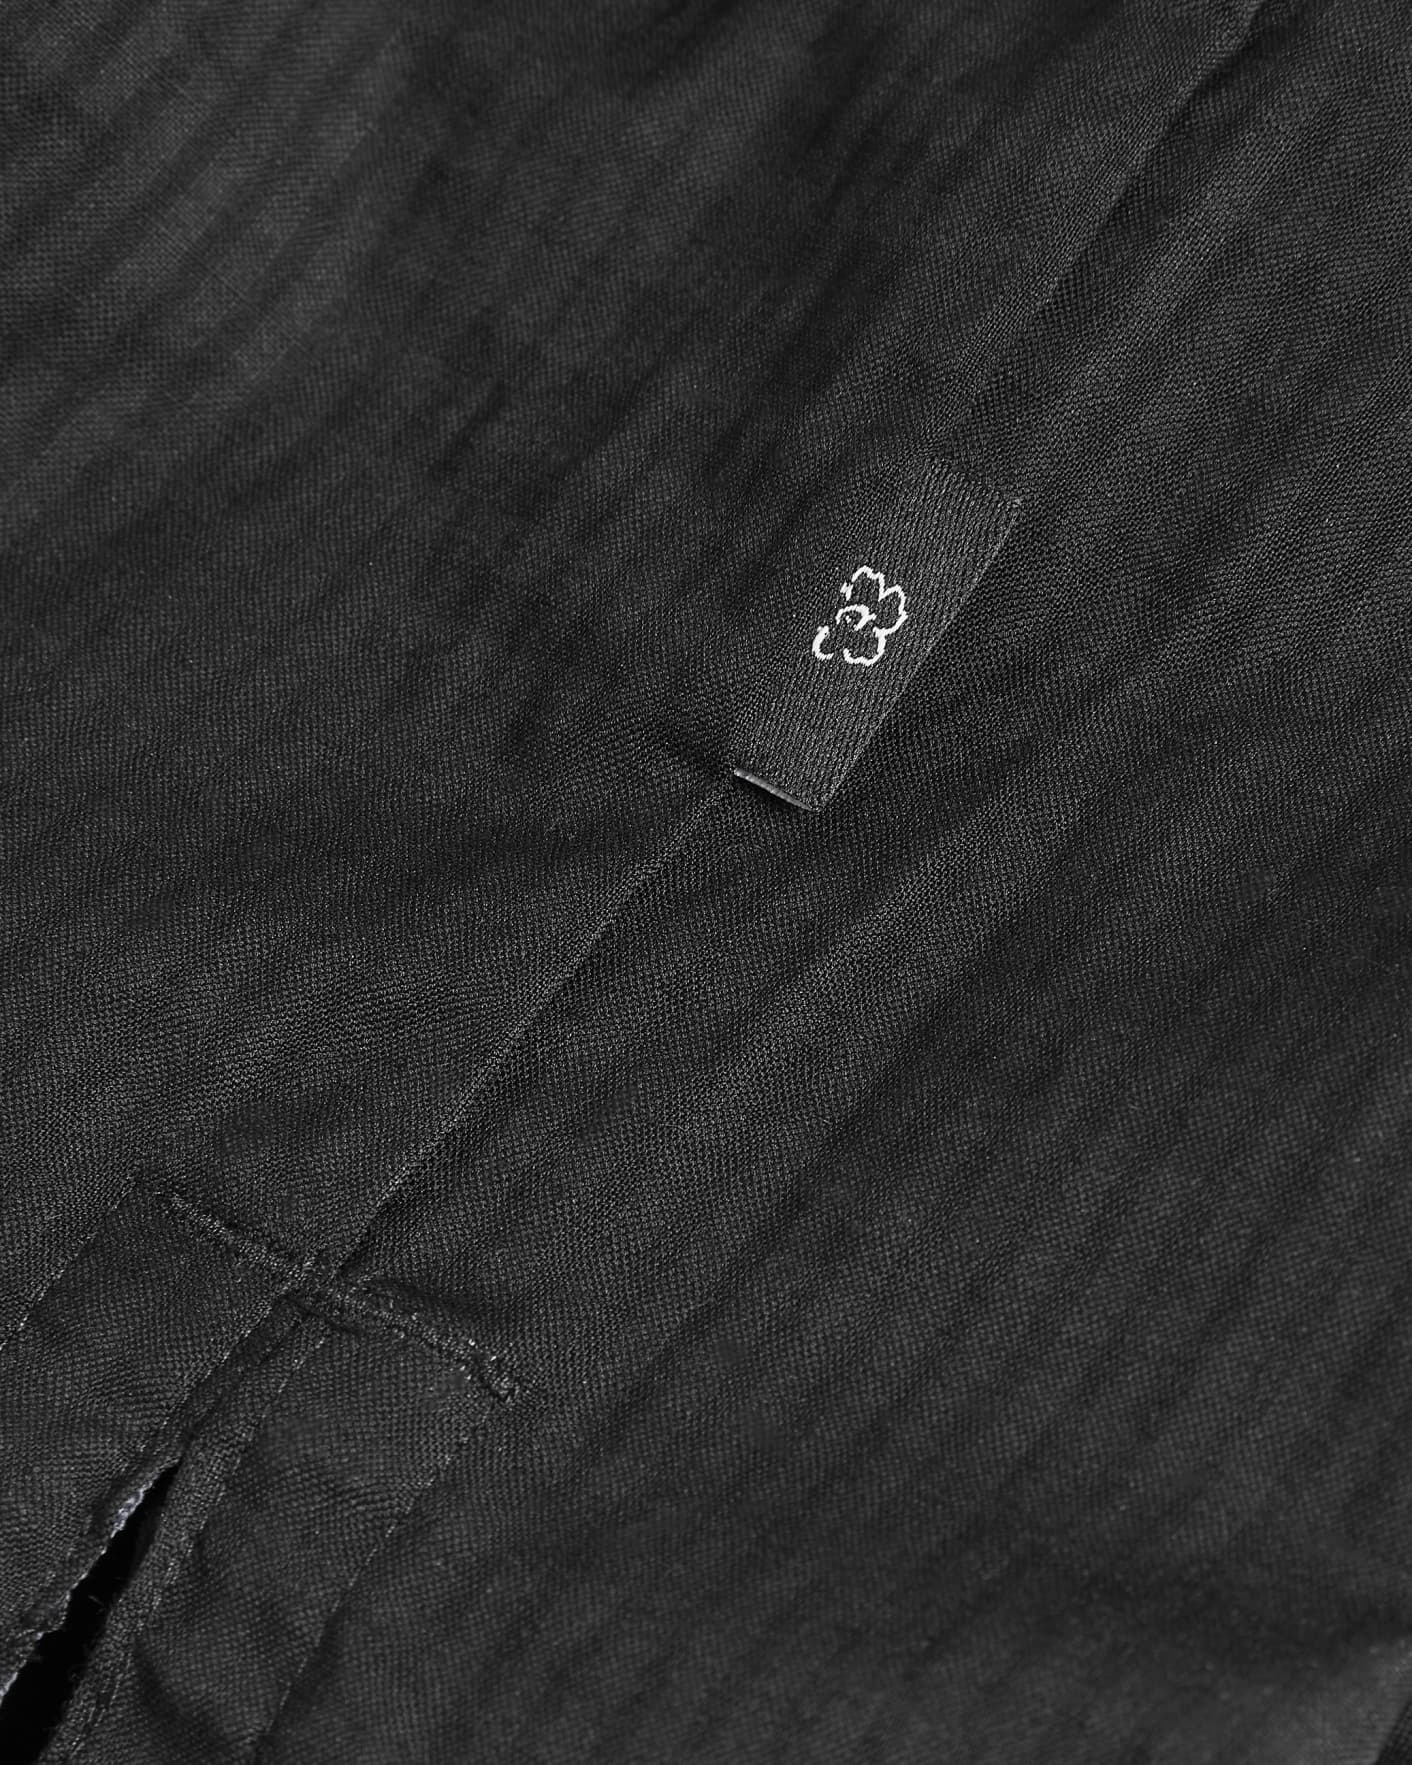 Black Short Sleeve Contrast Texture Shirt Ted Baker